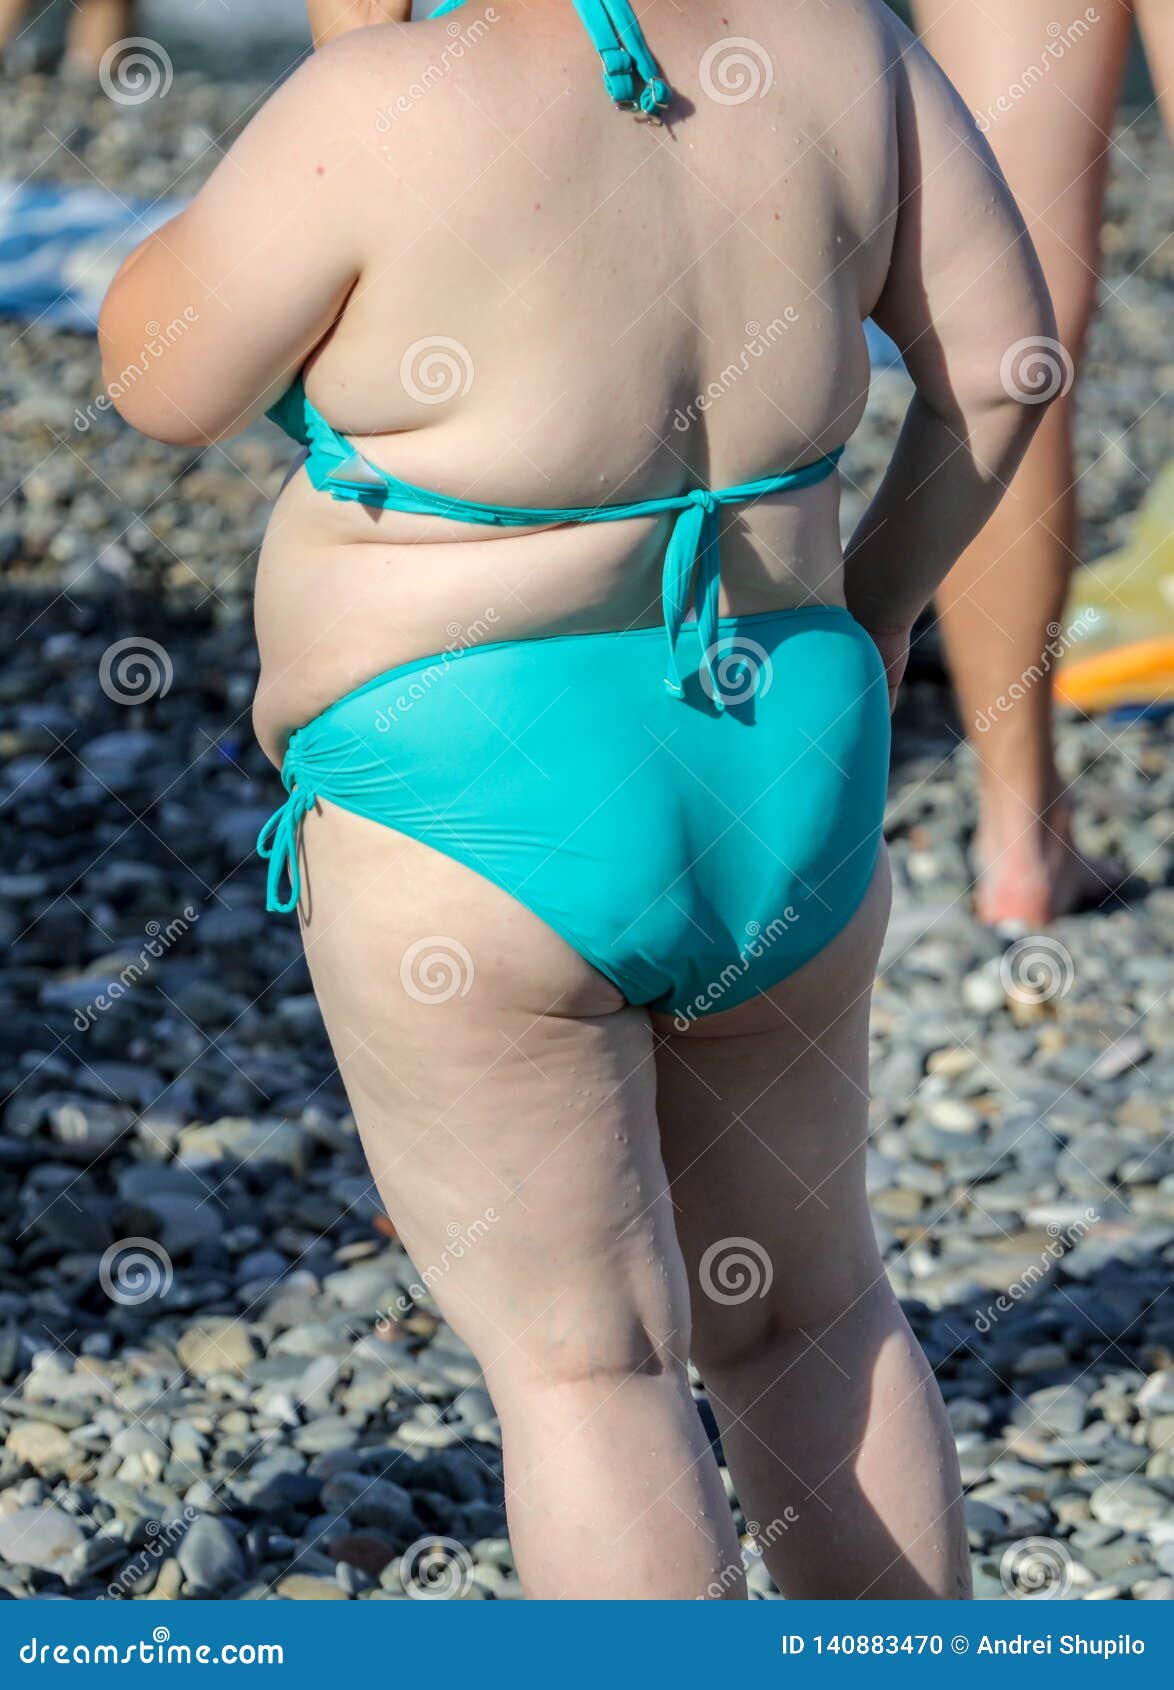 hot fat granny at beach